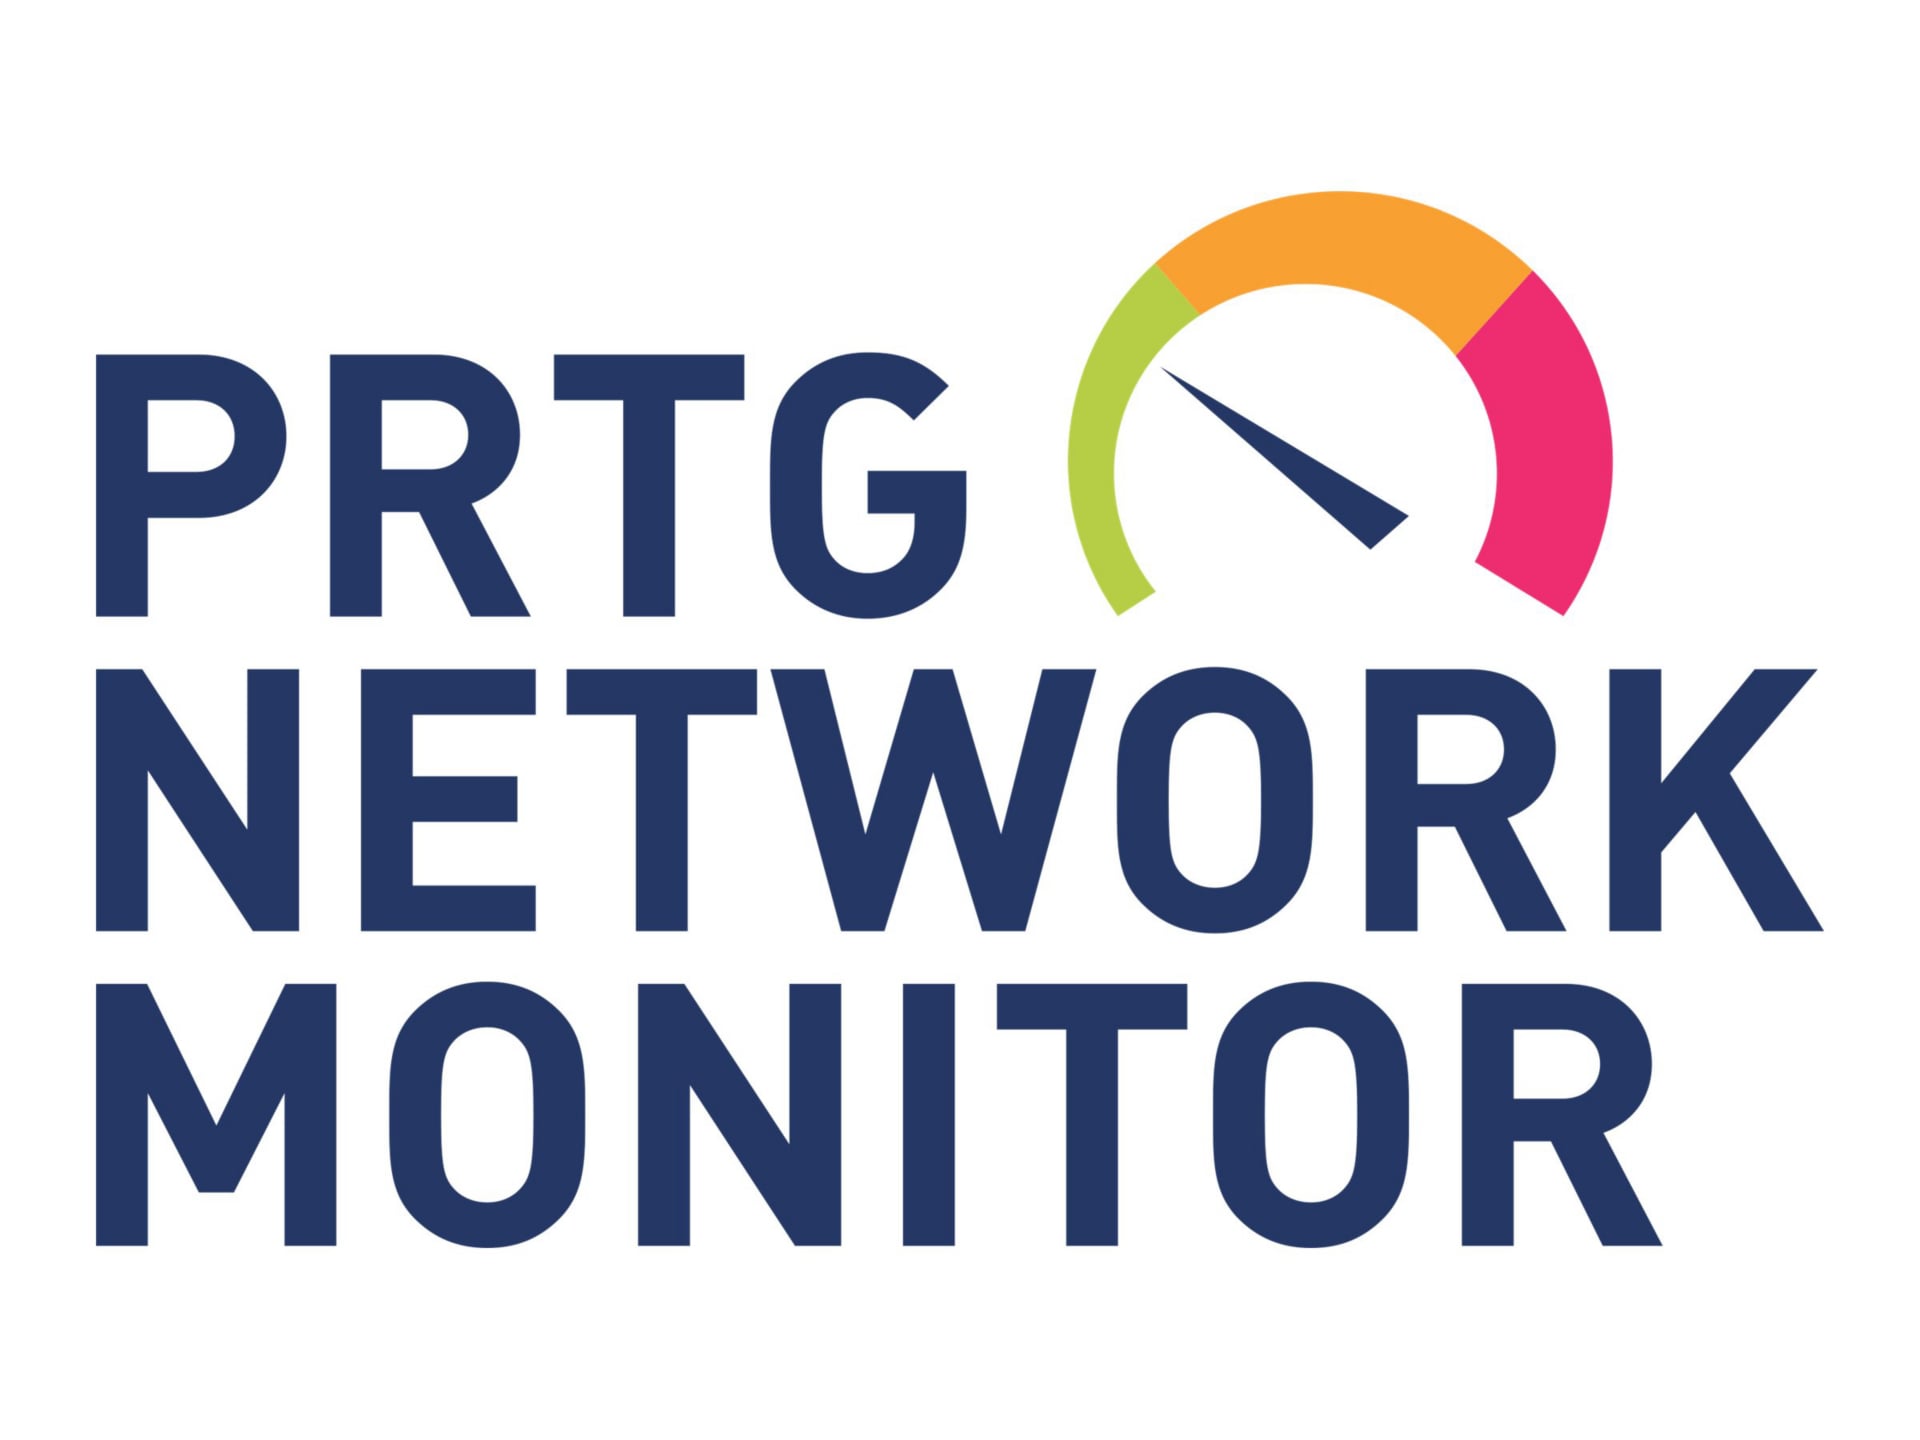 Paessler Software Maintenance - product info support - for PRTG Network Mon